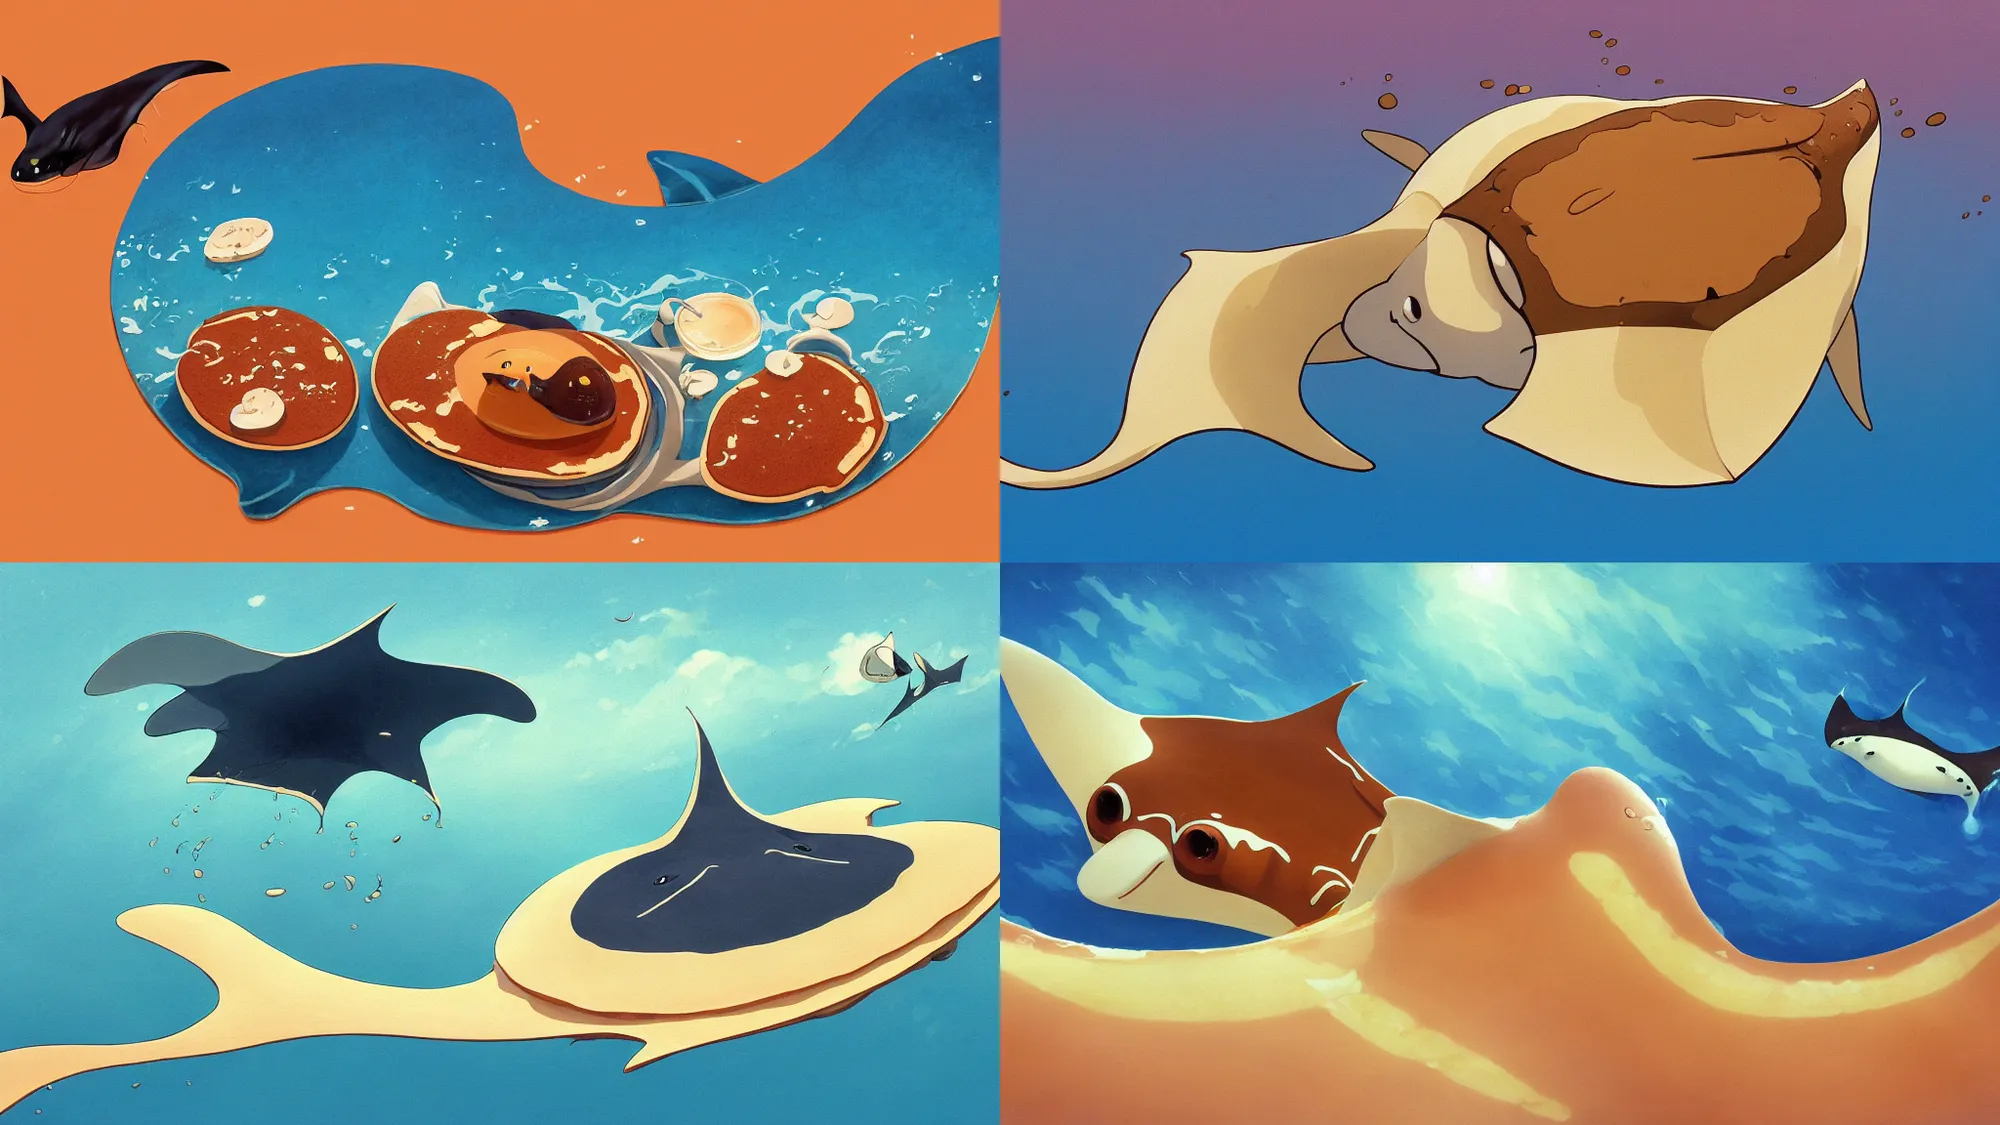 Prompt: painting of a happy flat pancake manta ray swimming in syrup, intricate, cute, 4 k, manta ray made of pancake, fantasy food world, living food adorable pancake, brown atmospheric lighting, by makoto shinkai, studio ghibli, chris moore